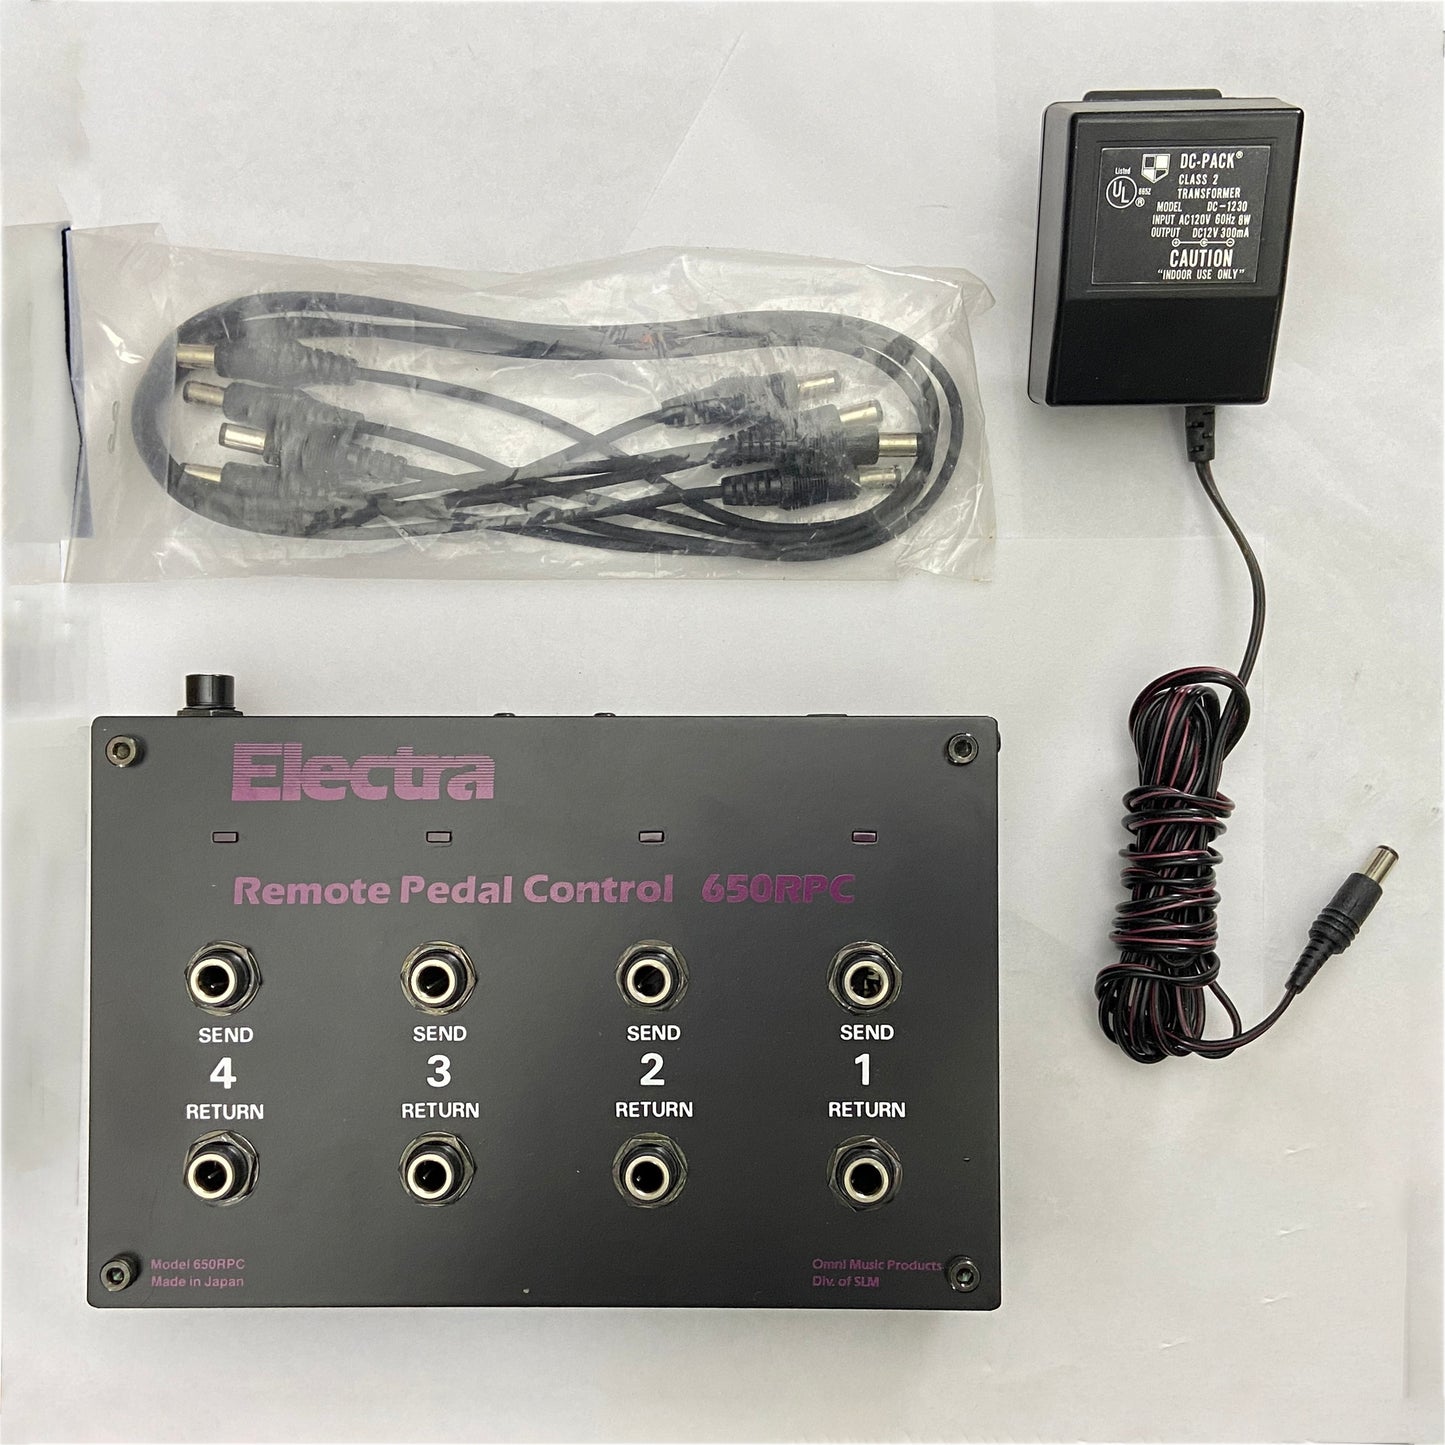 ELECTRA 650RPC Remote Pedal Control (B-STOCK)